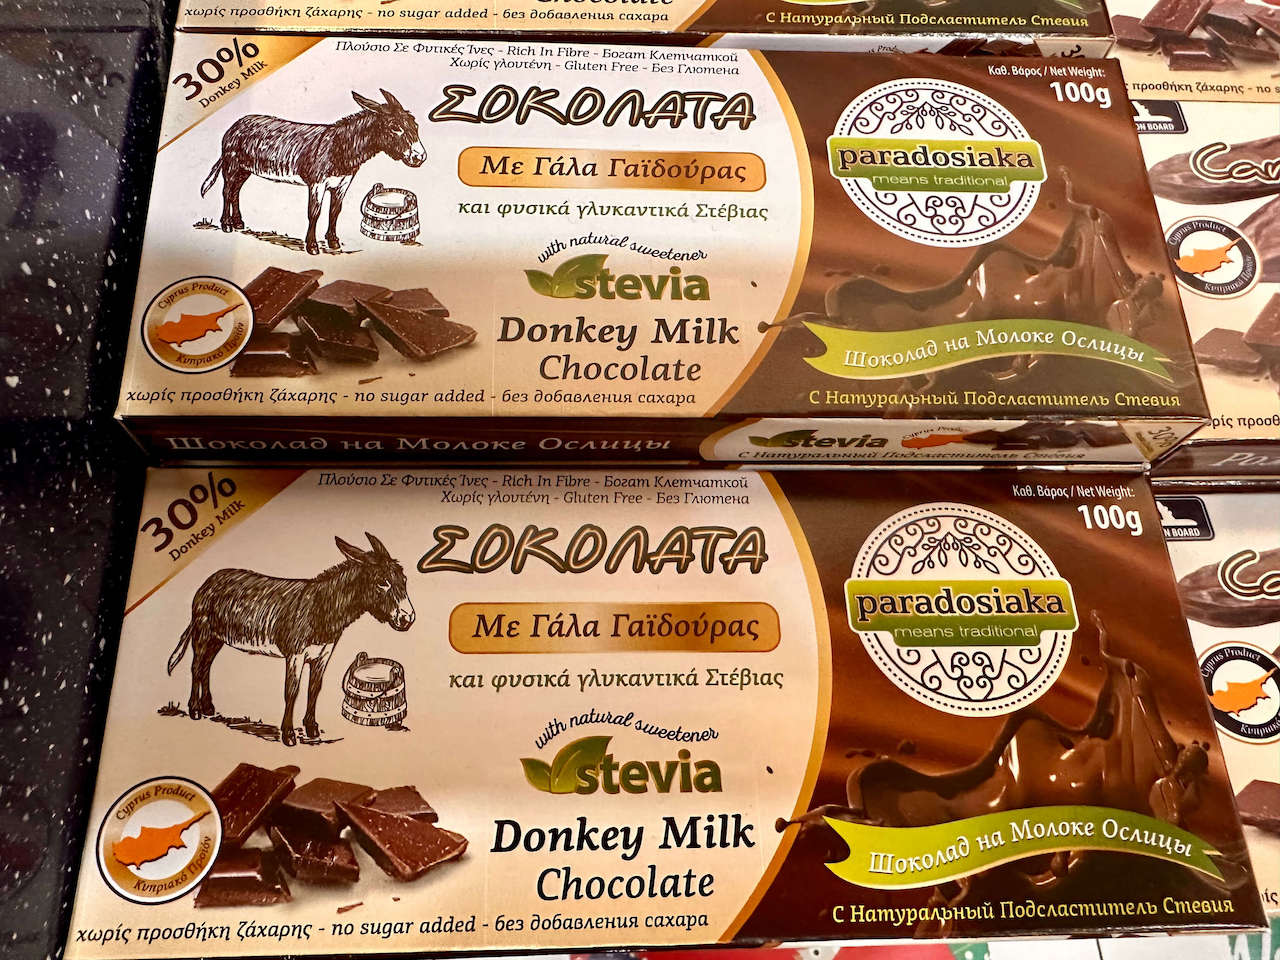 Cyprus, Paphos - Donkey Milk Chocolate